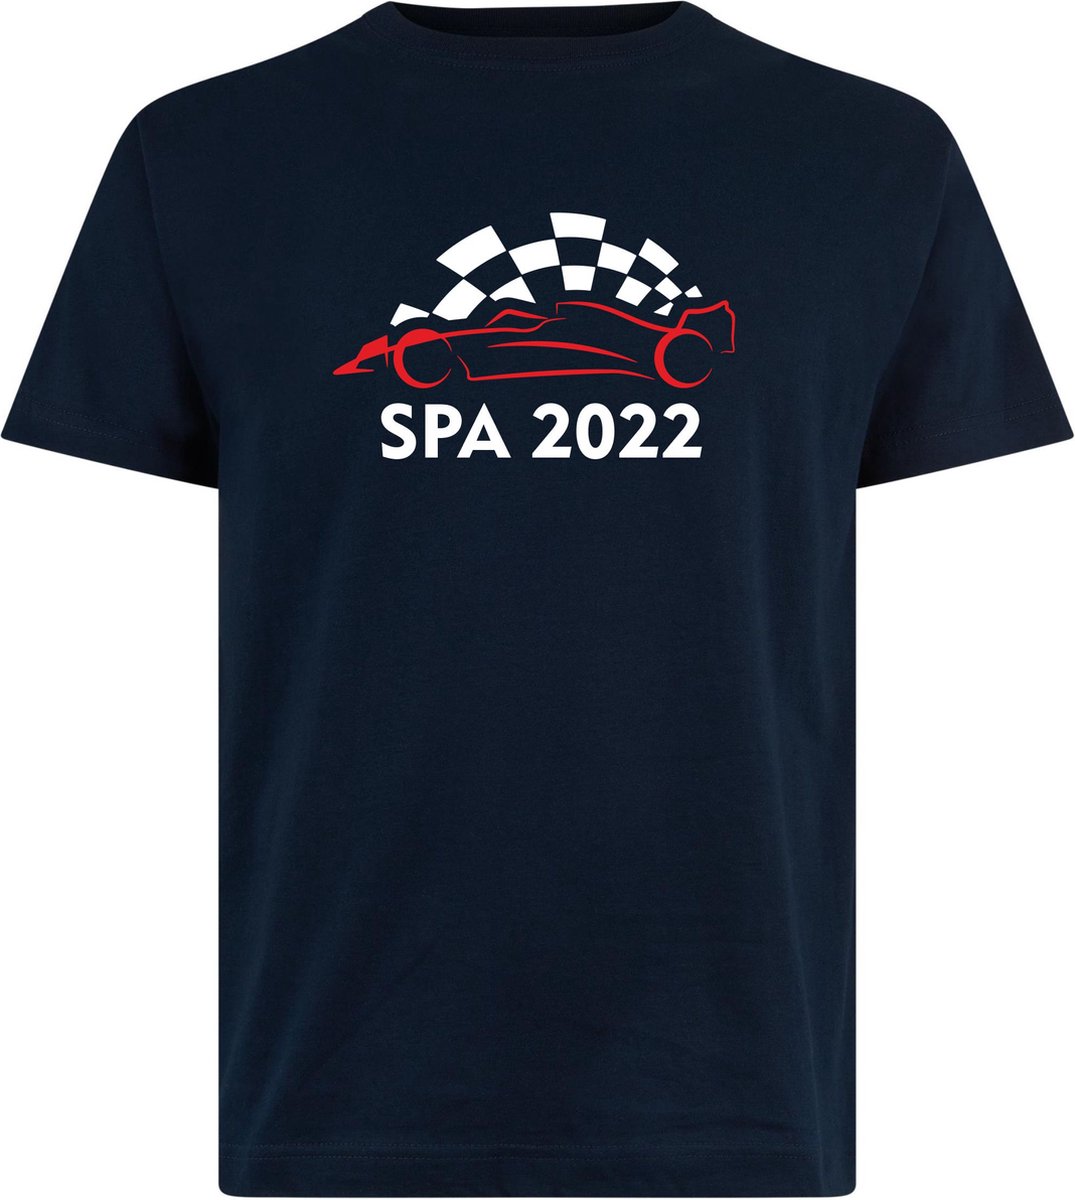 T-shirt kinderen Spa 2022 met raceauto | Max Verstappen / Red Bull Racing / Formule 1 fan | Grand Prix Circuit Spa-Francorchamps | kleding shirt | Navy | maat 92